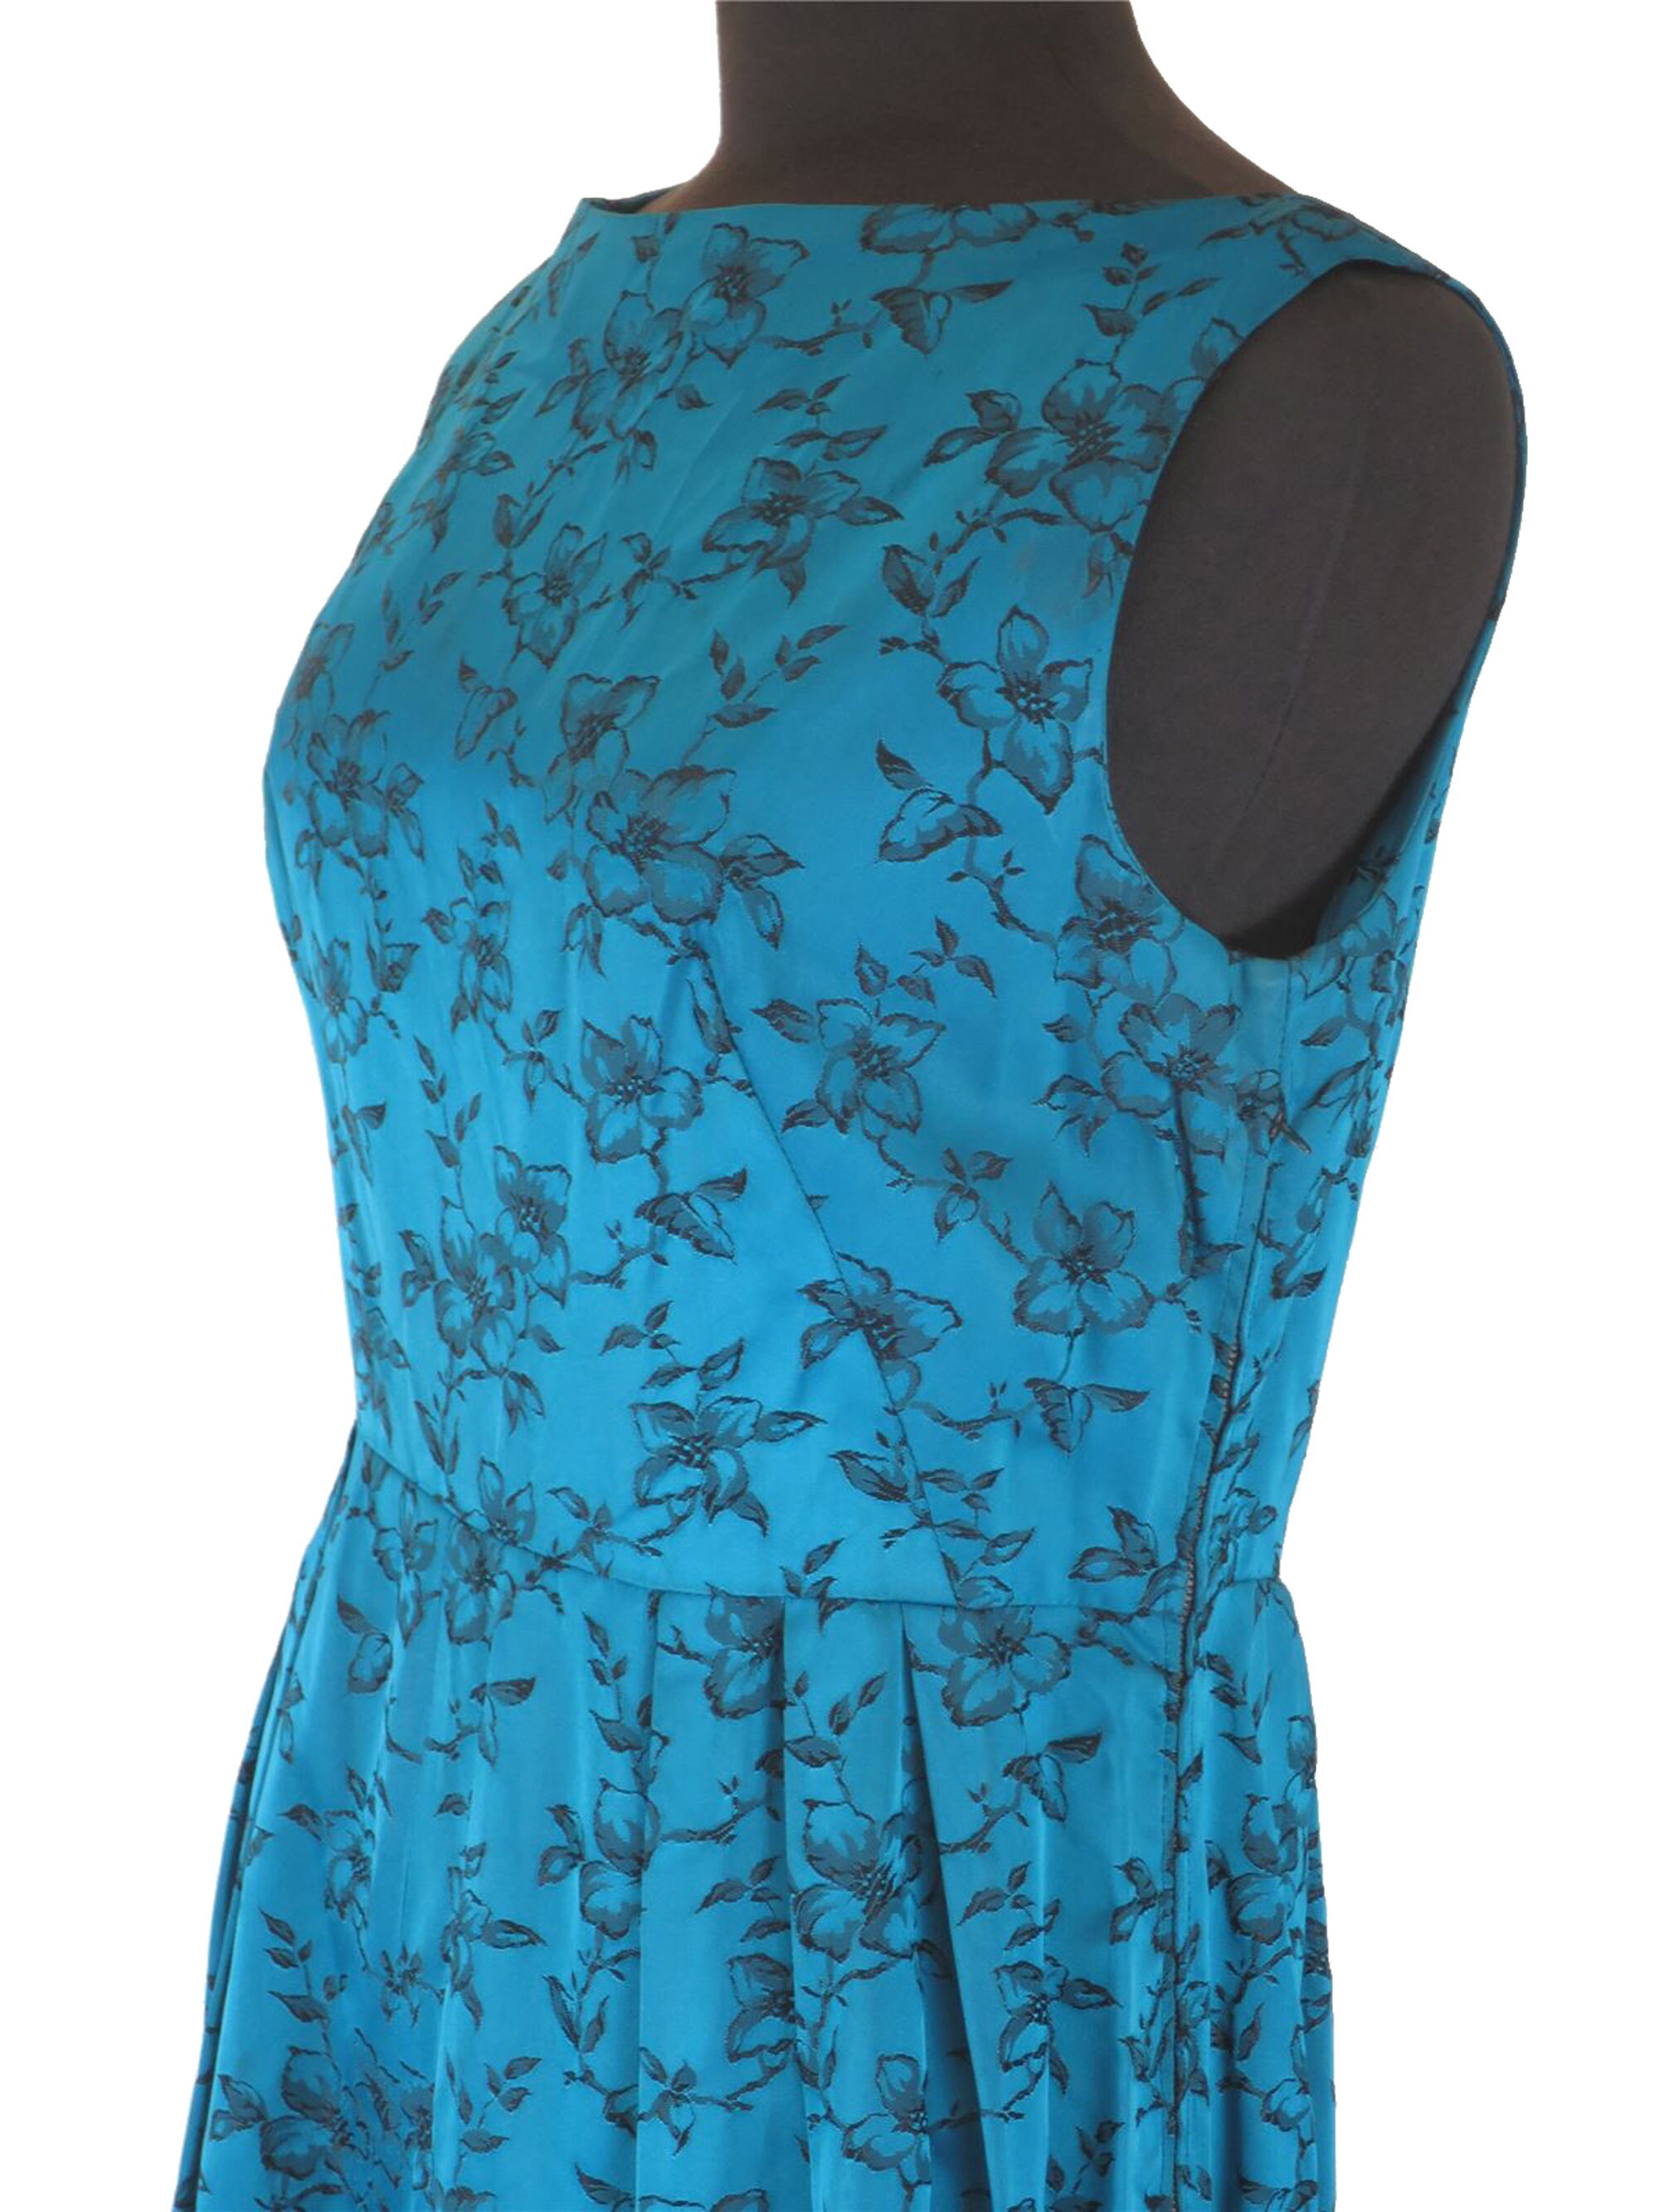 Kingfisher Brocade Full Length Vintage Evening Gown UK 12-14 | Etsy